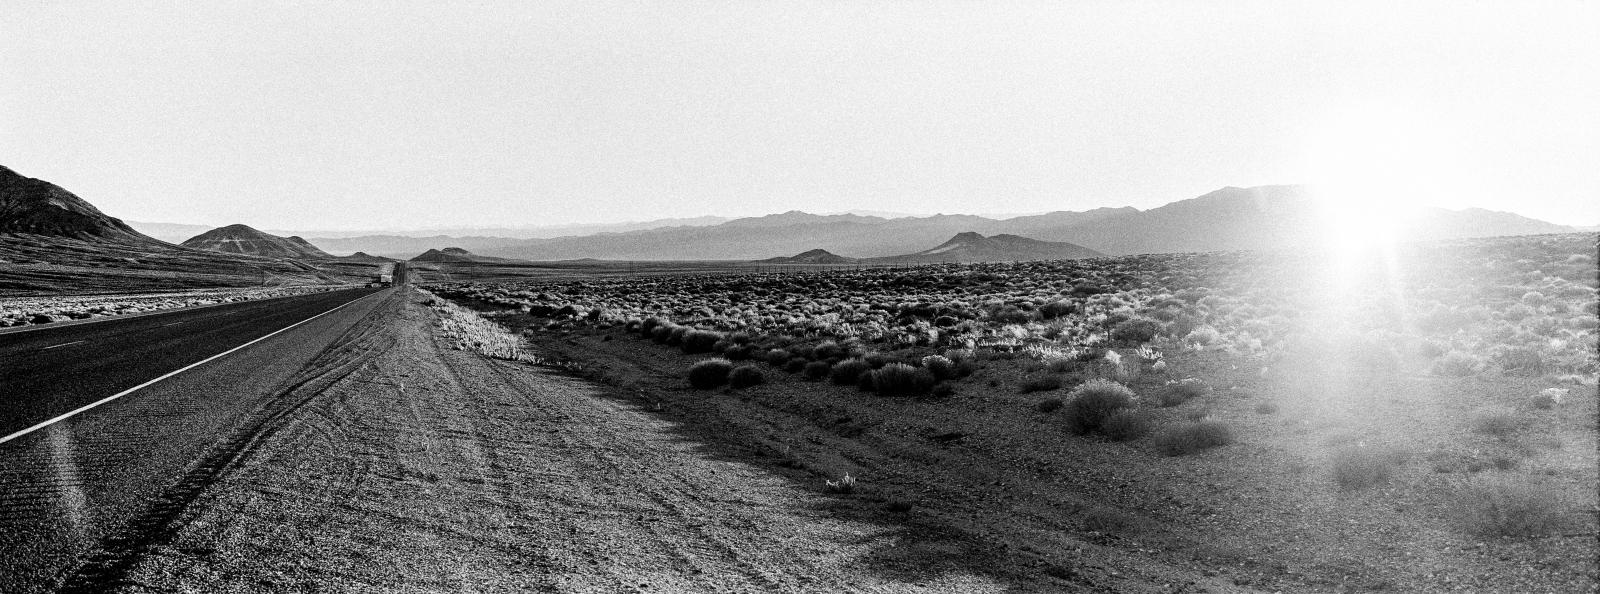 Desert Southwest USA 04-0920-121 | Buy this image